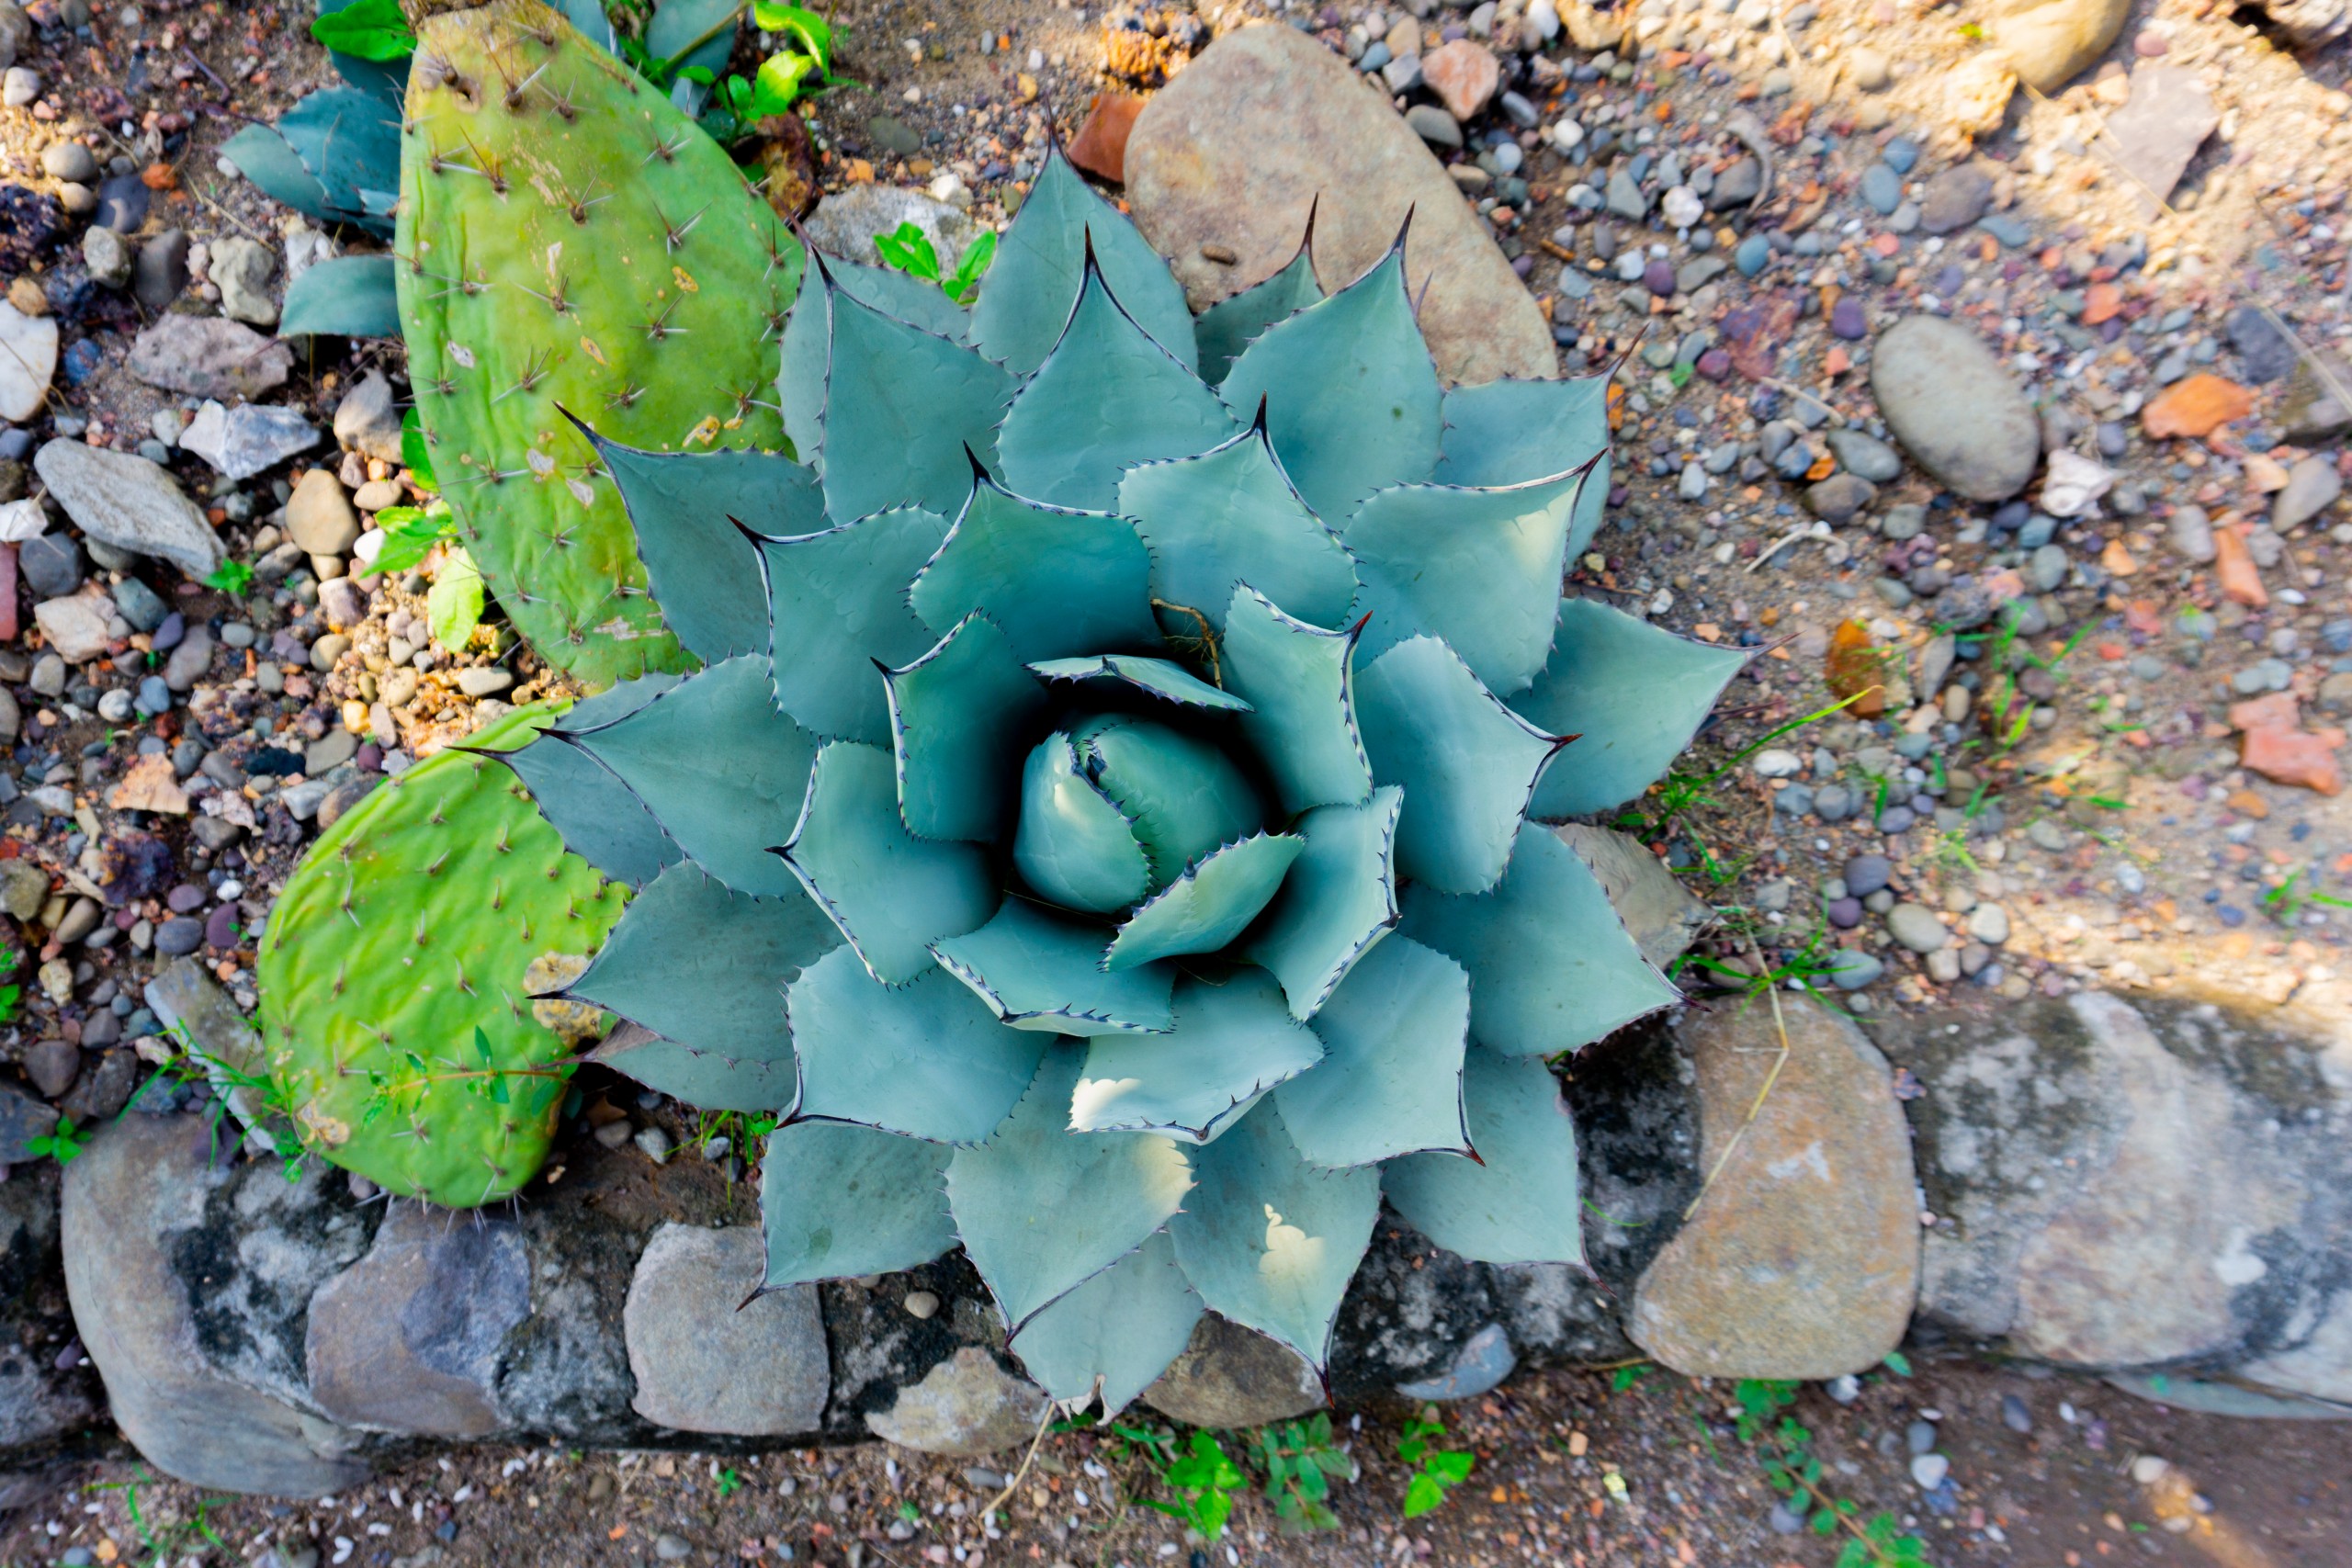 Agave Potatorum – Mexican cactus plant